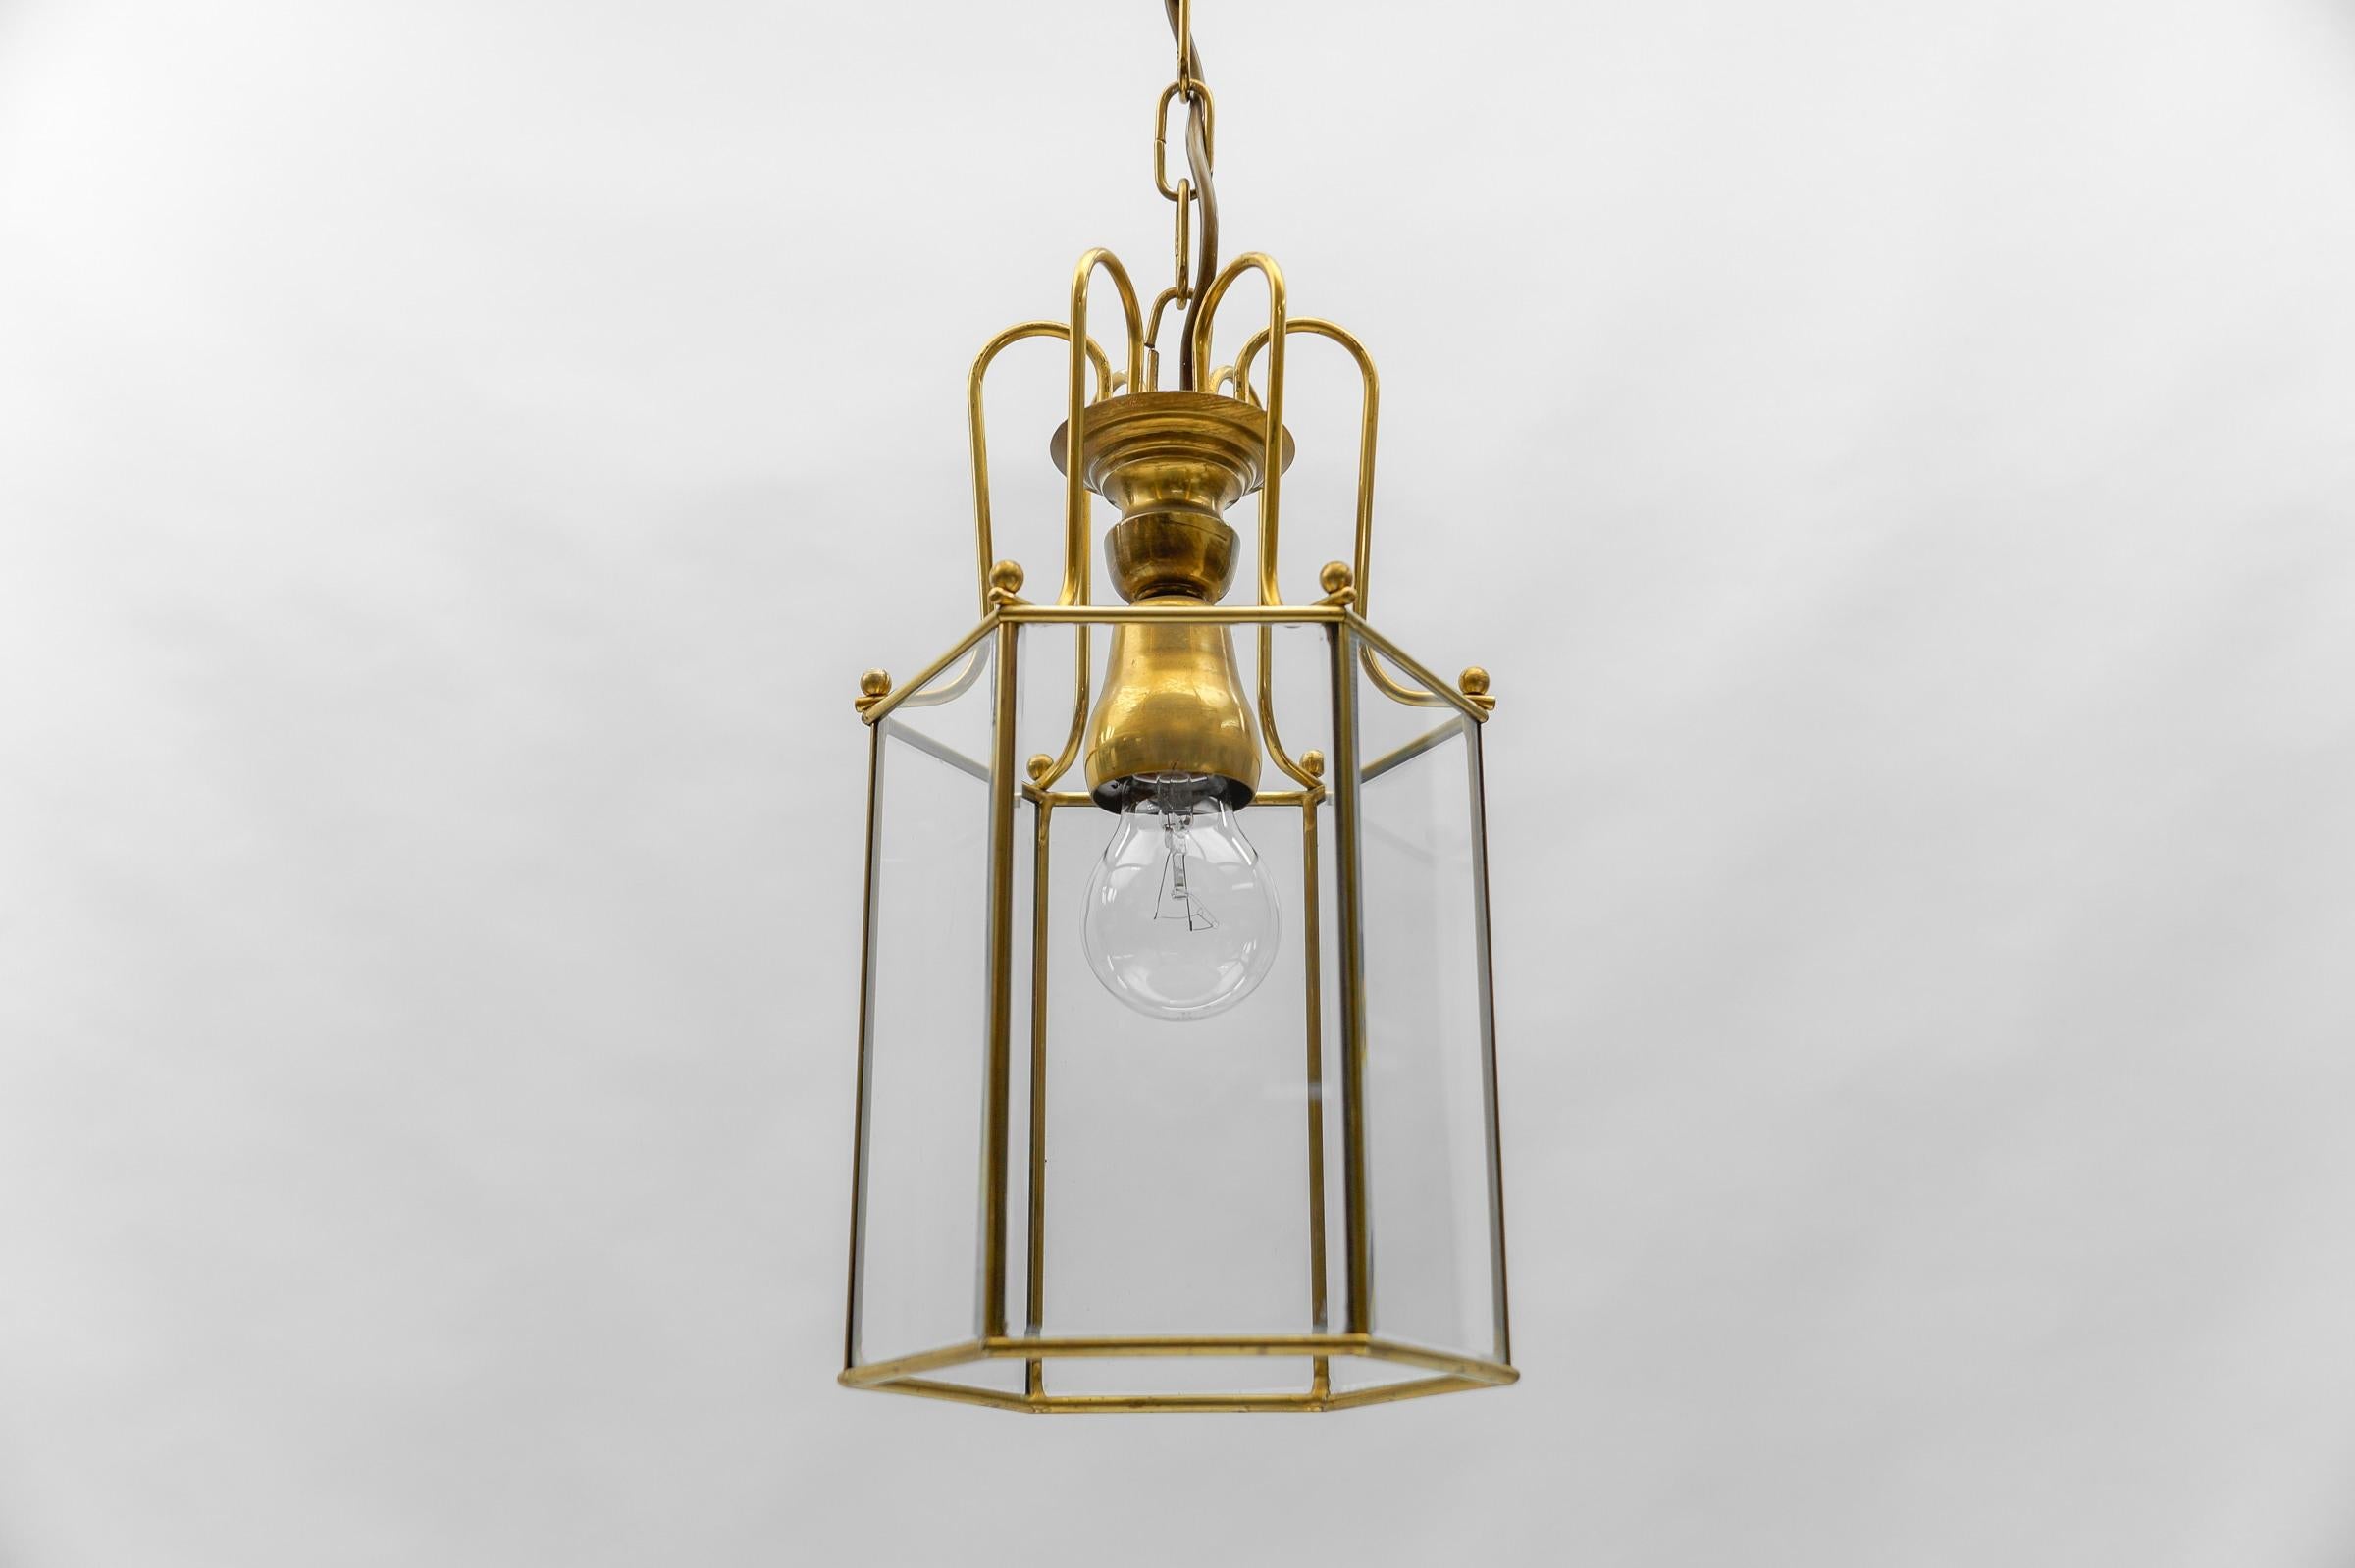 German Art Deco Cut Glass Pendant Lamp in Brass, 1940s / 1950s For Sale